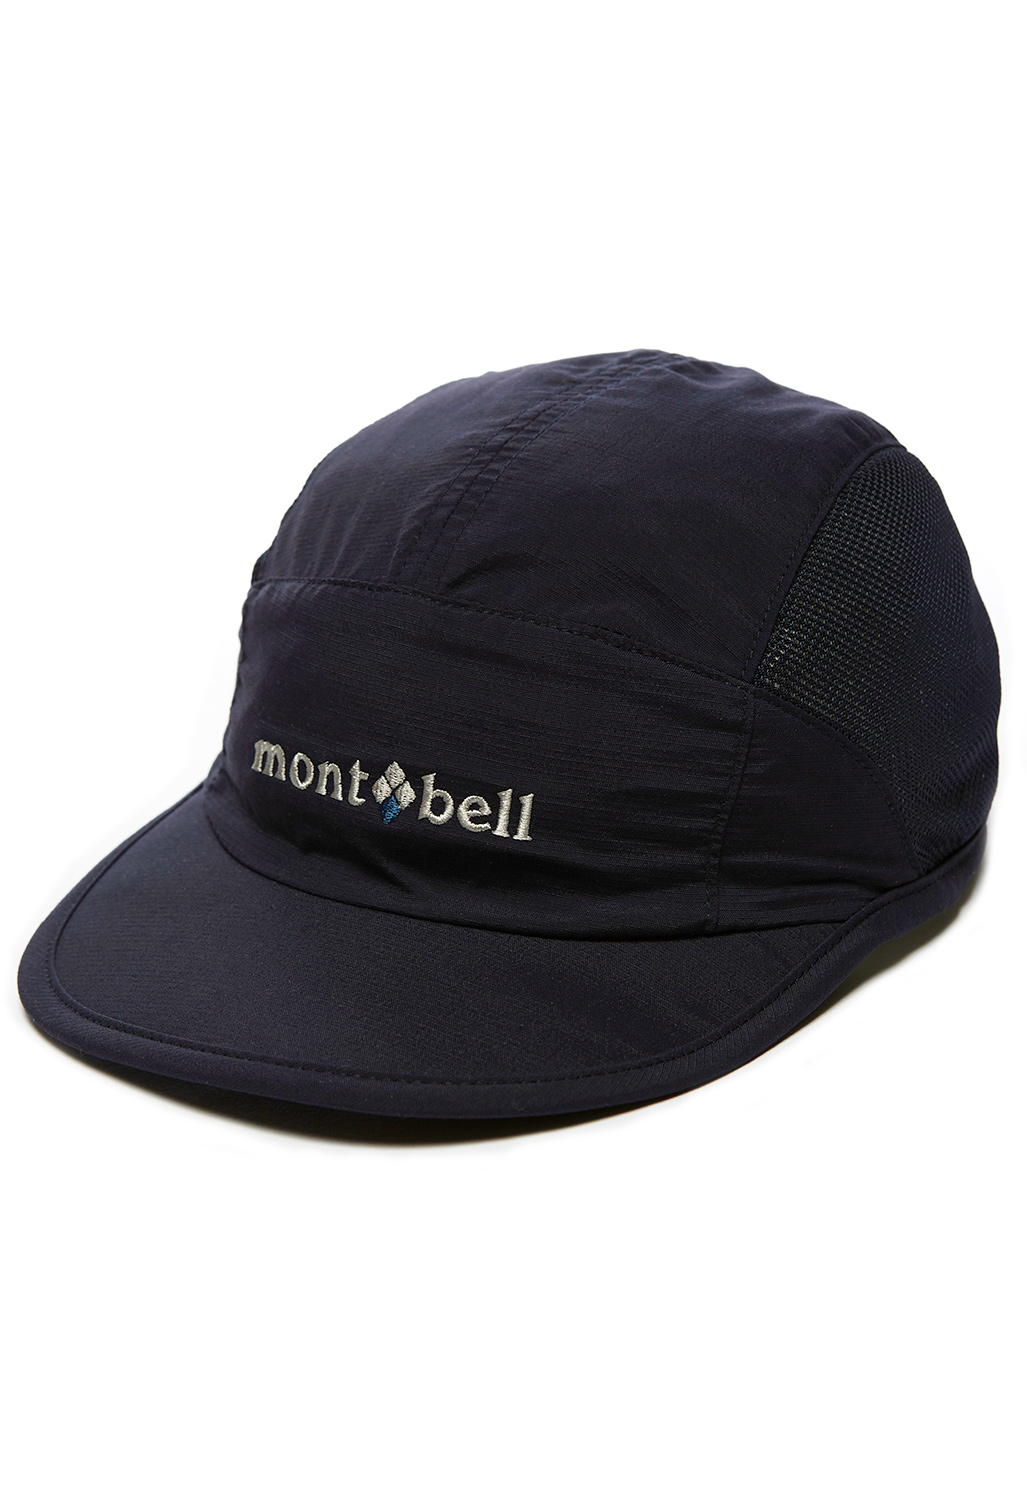 Montbell Mesh Crusher Cap